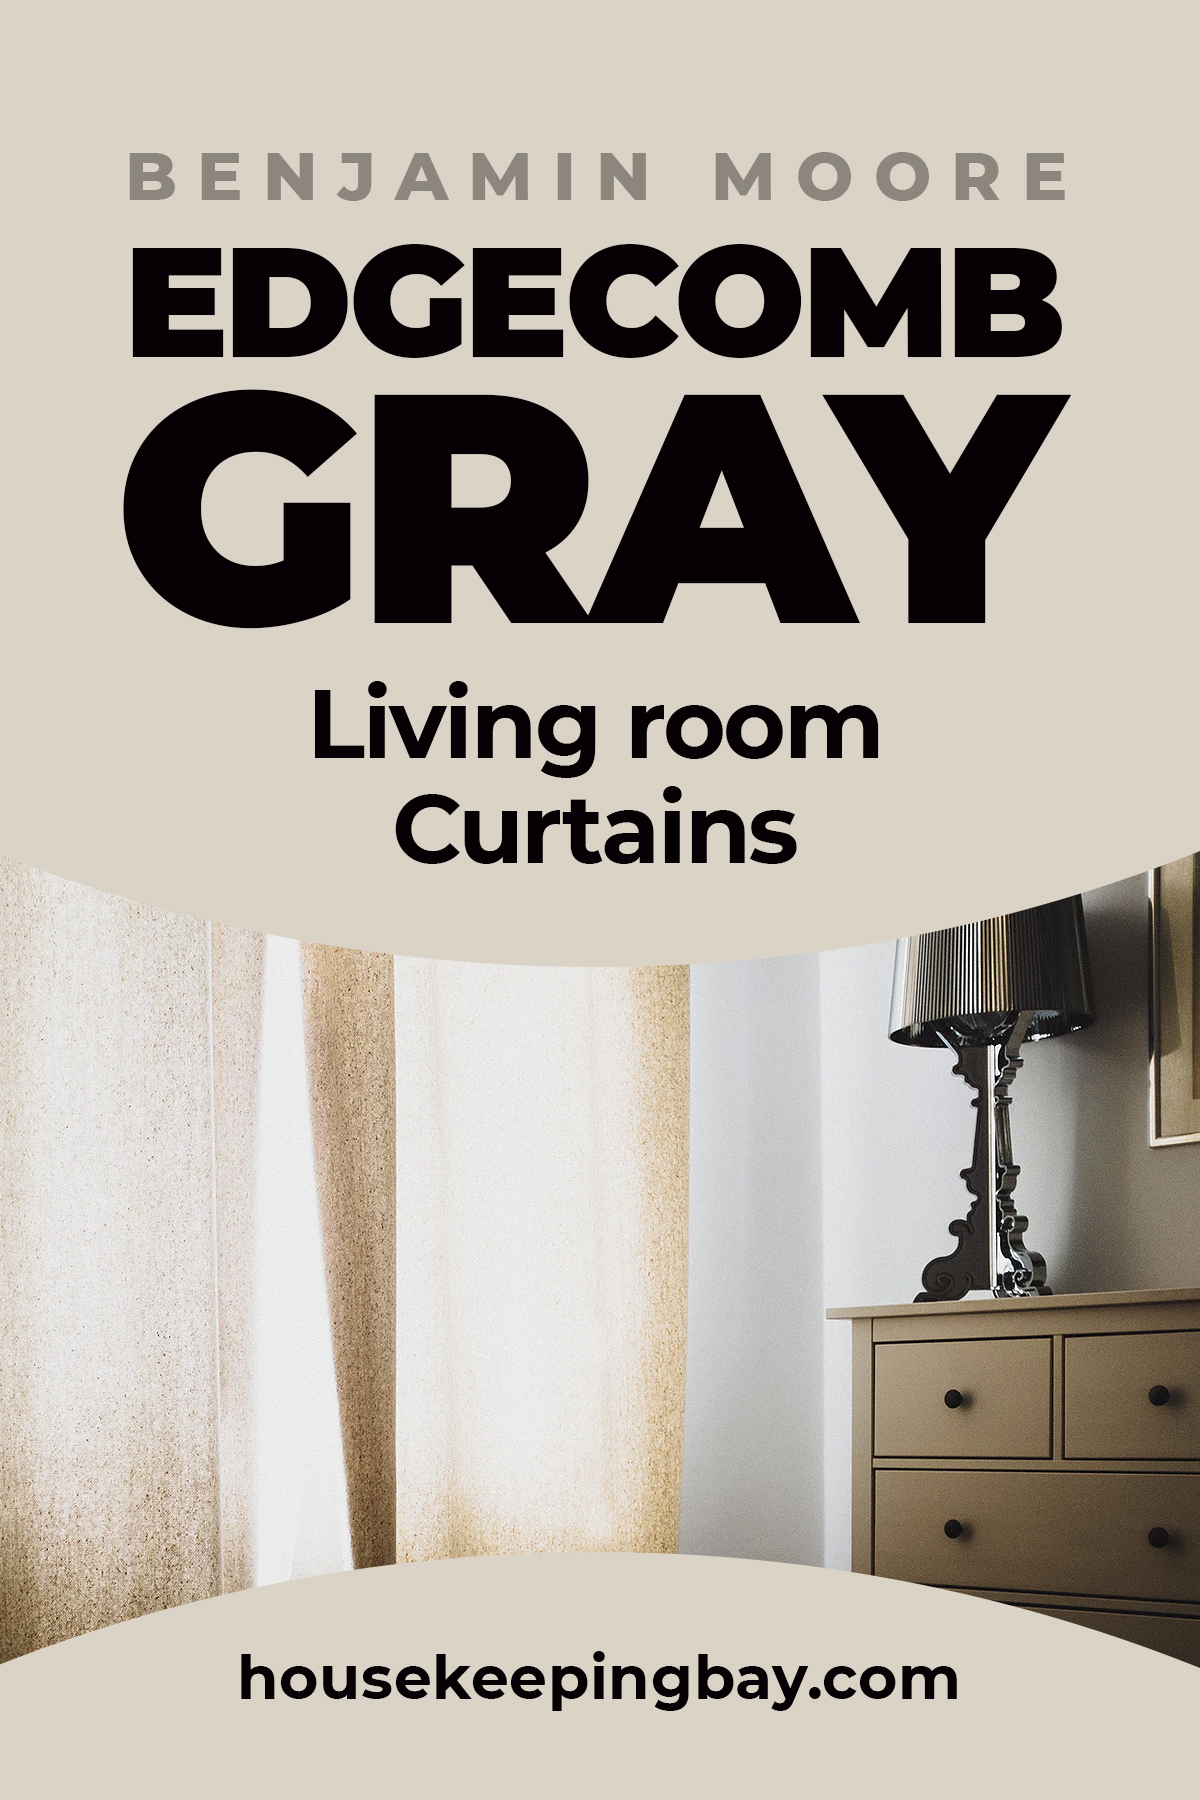 Edgecomb Gray living room urtains